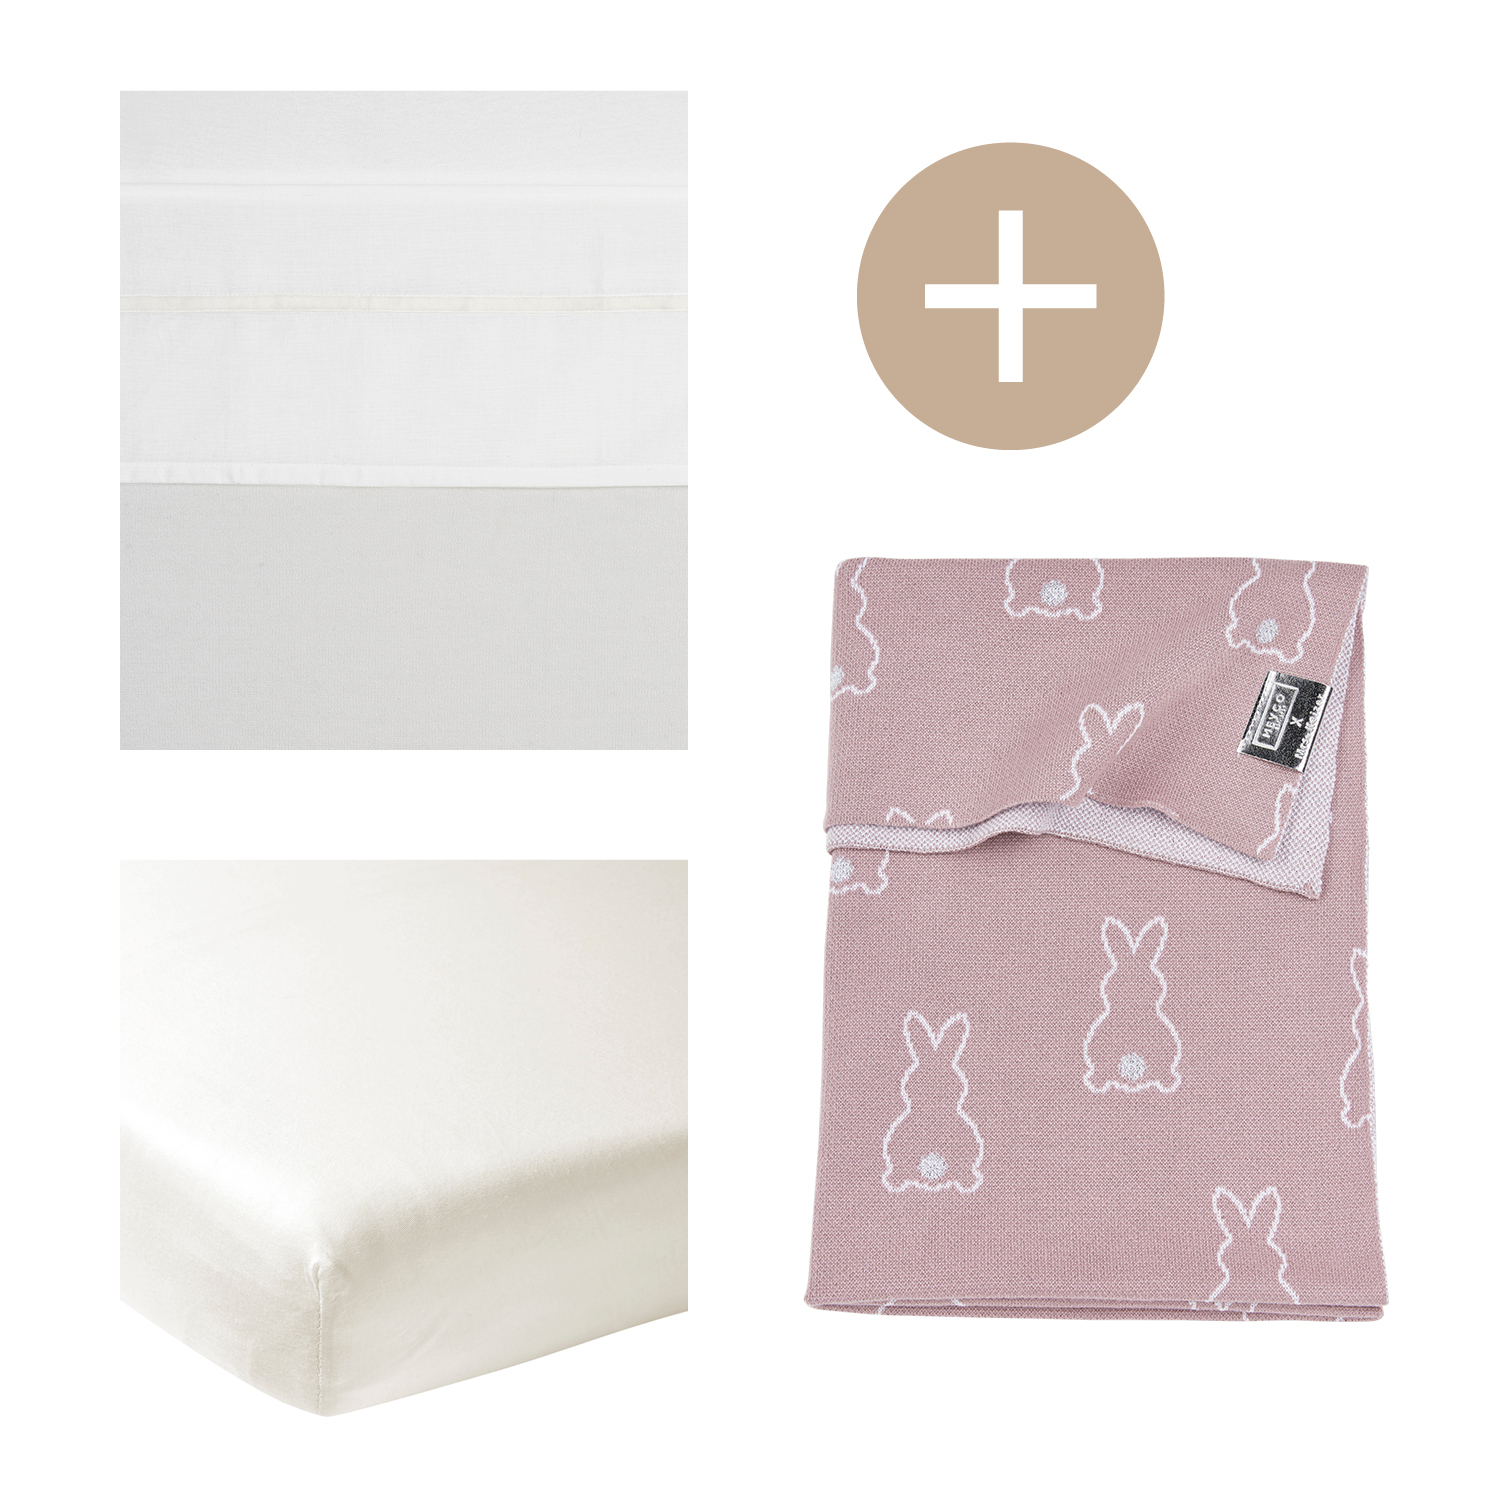 Ledikant deken + ledikant laken + hoeslaken ledikant Rabbit - lilac - 100x150cm